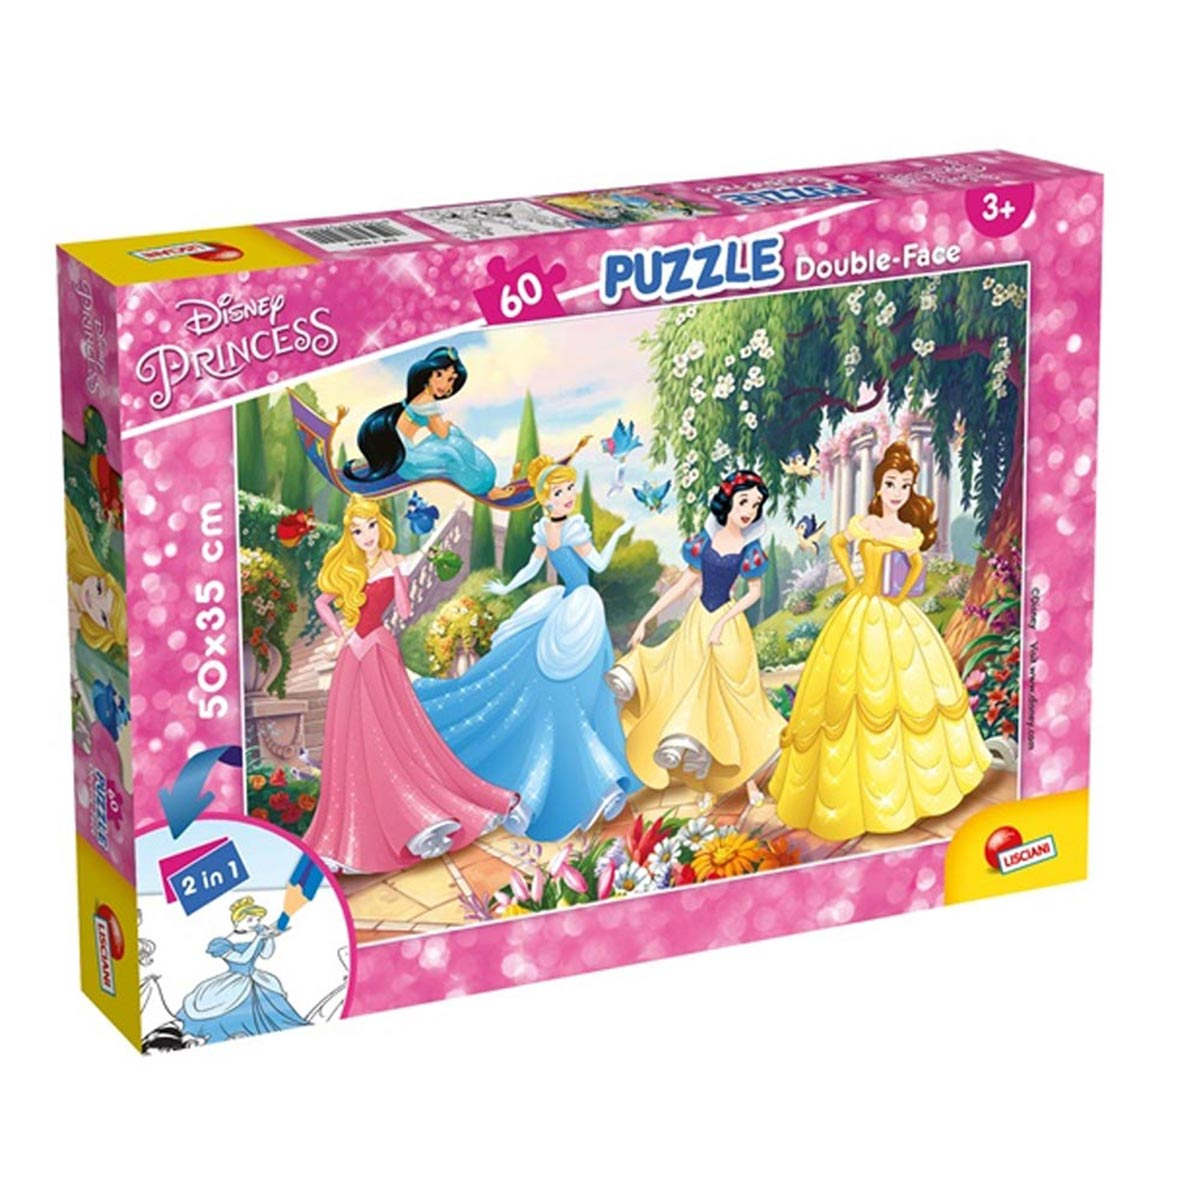 Ausmal-Puzzle von PRINCESS 60 Prinzessin Lernspiele DISNEY (50x35cm) Teile, Lisciani